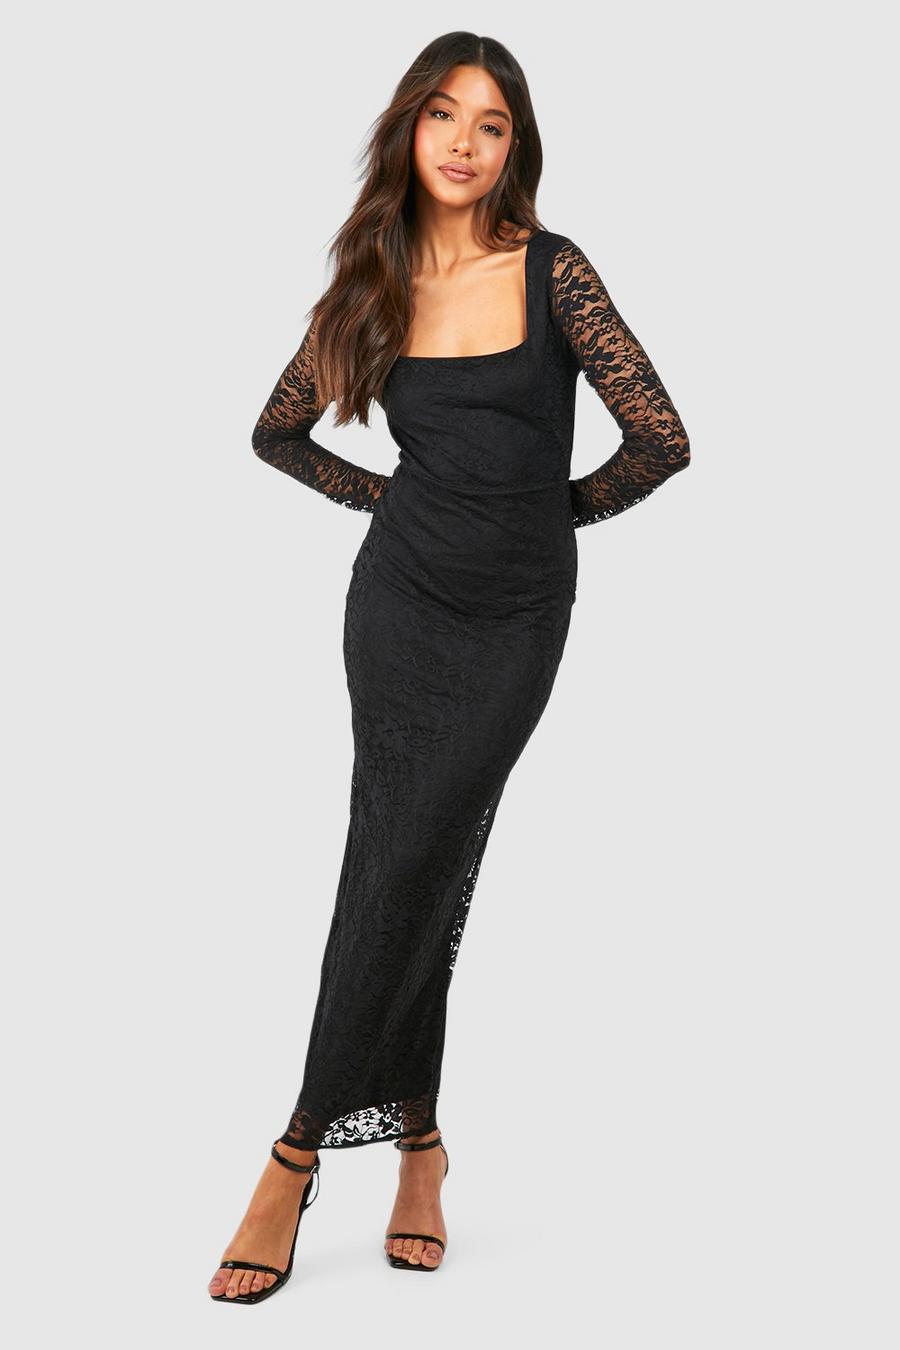 Veronique Long Sleeve Lace Cup Mini Dress in Black